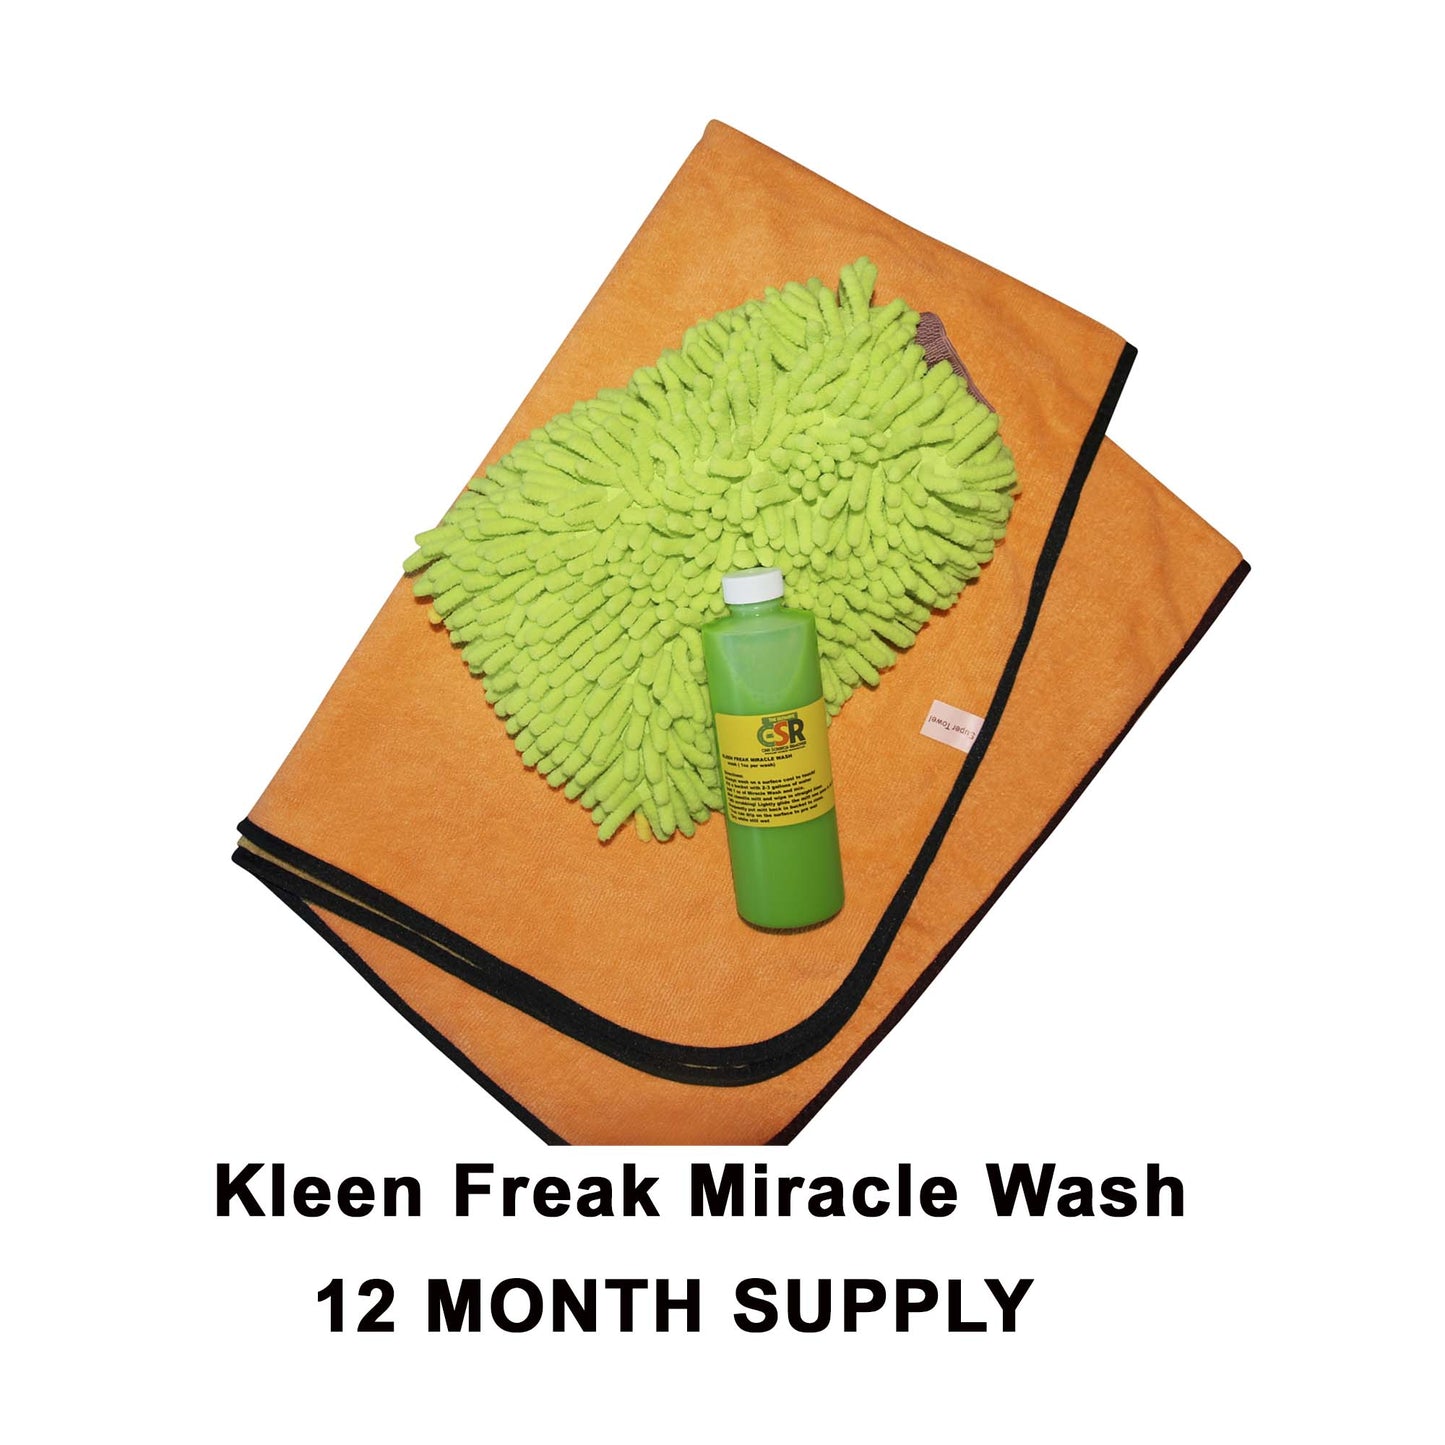 Kleen Freak Miracle Wash 12 Month Supply